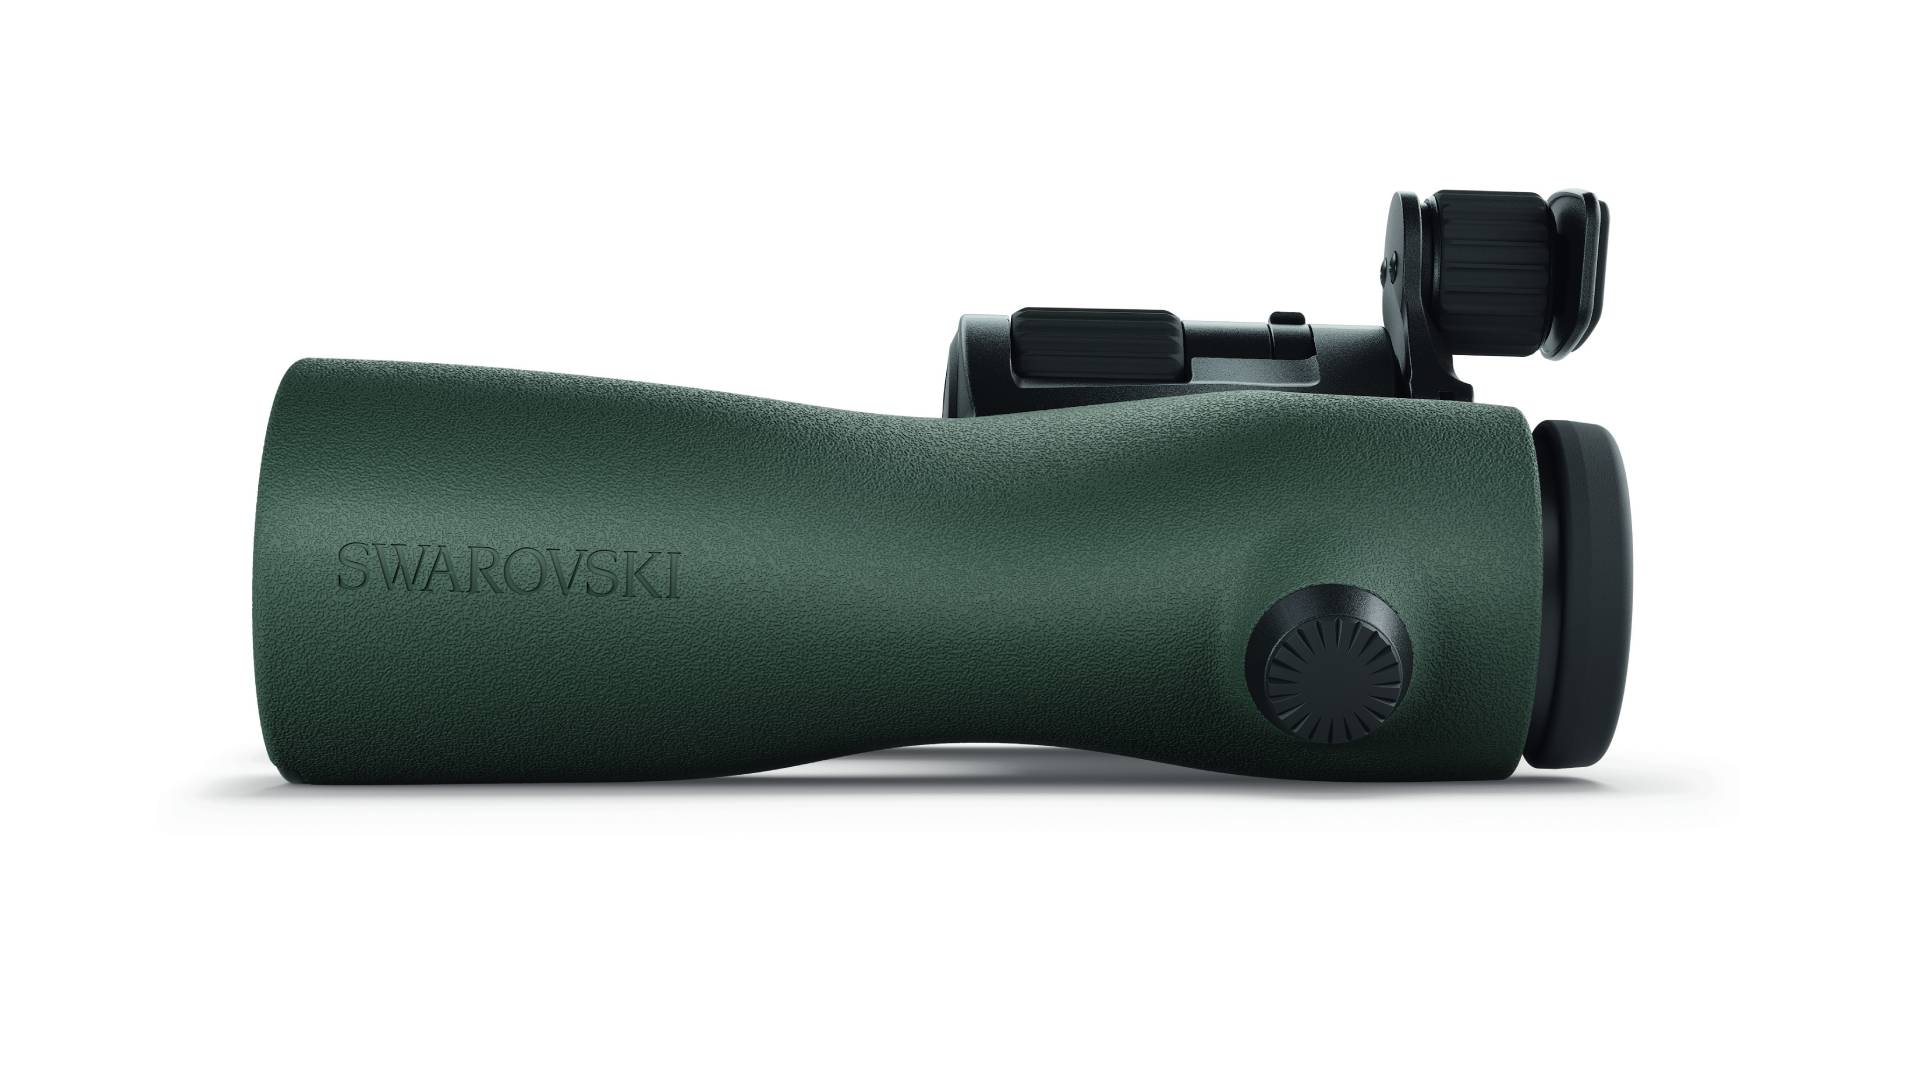 Swarovski NL Pure Binoculars, side view